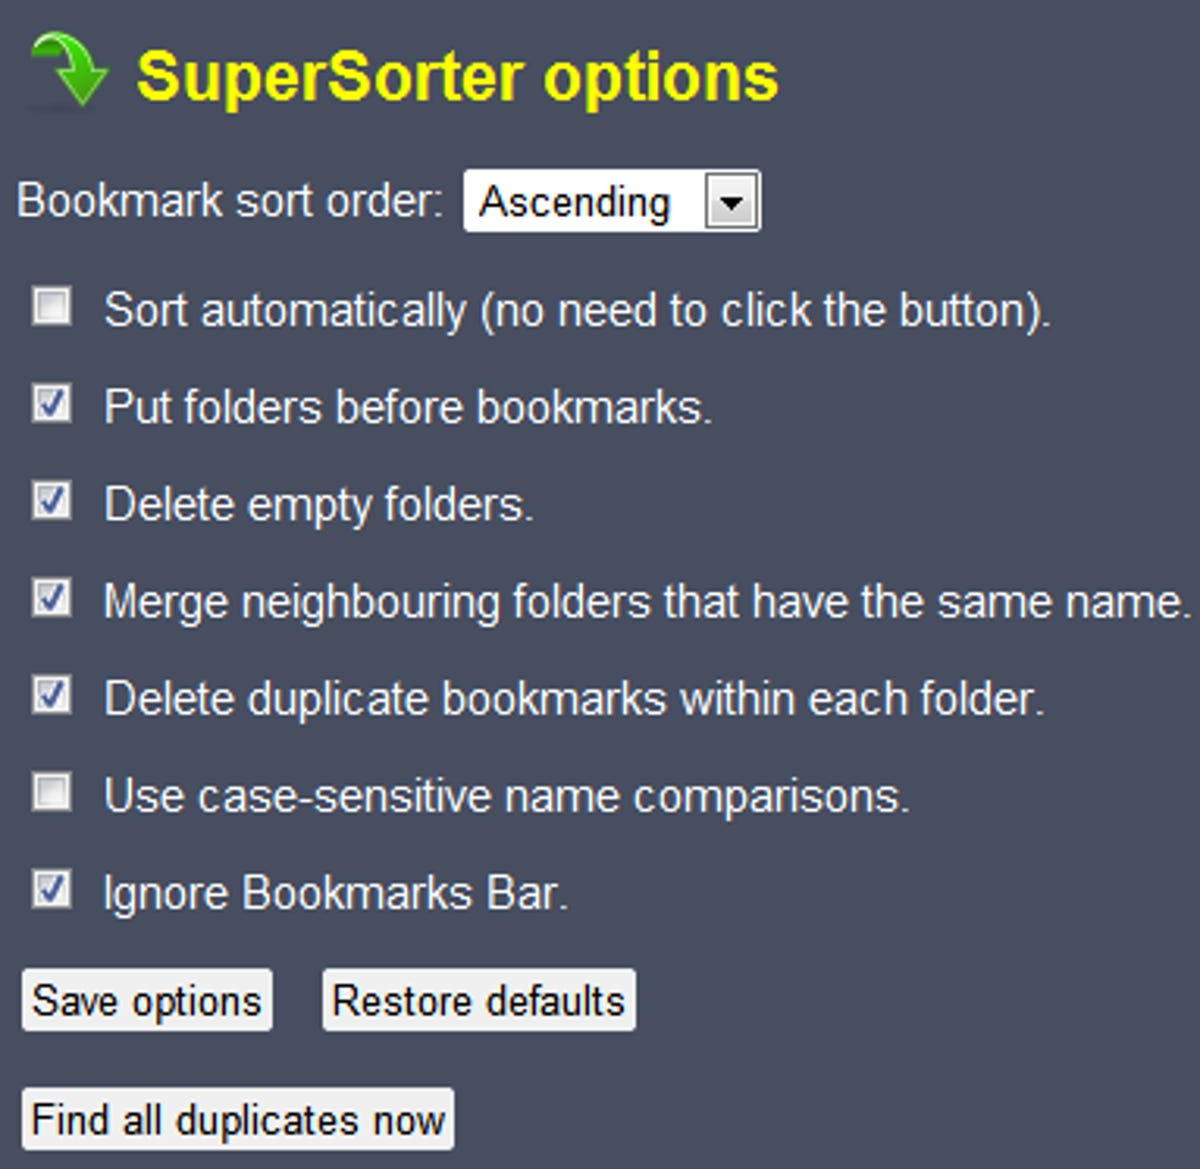 SuperSorter options list